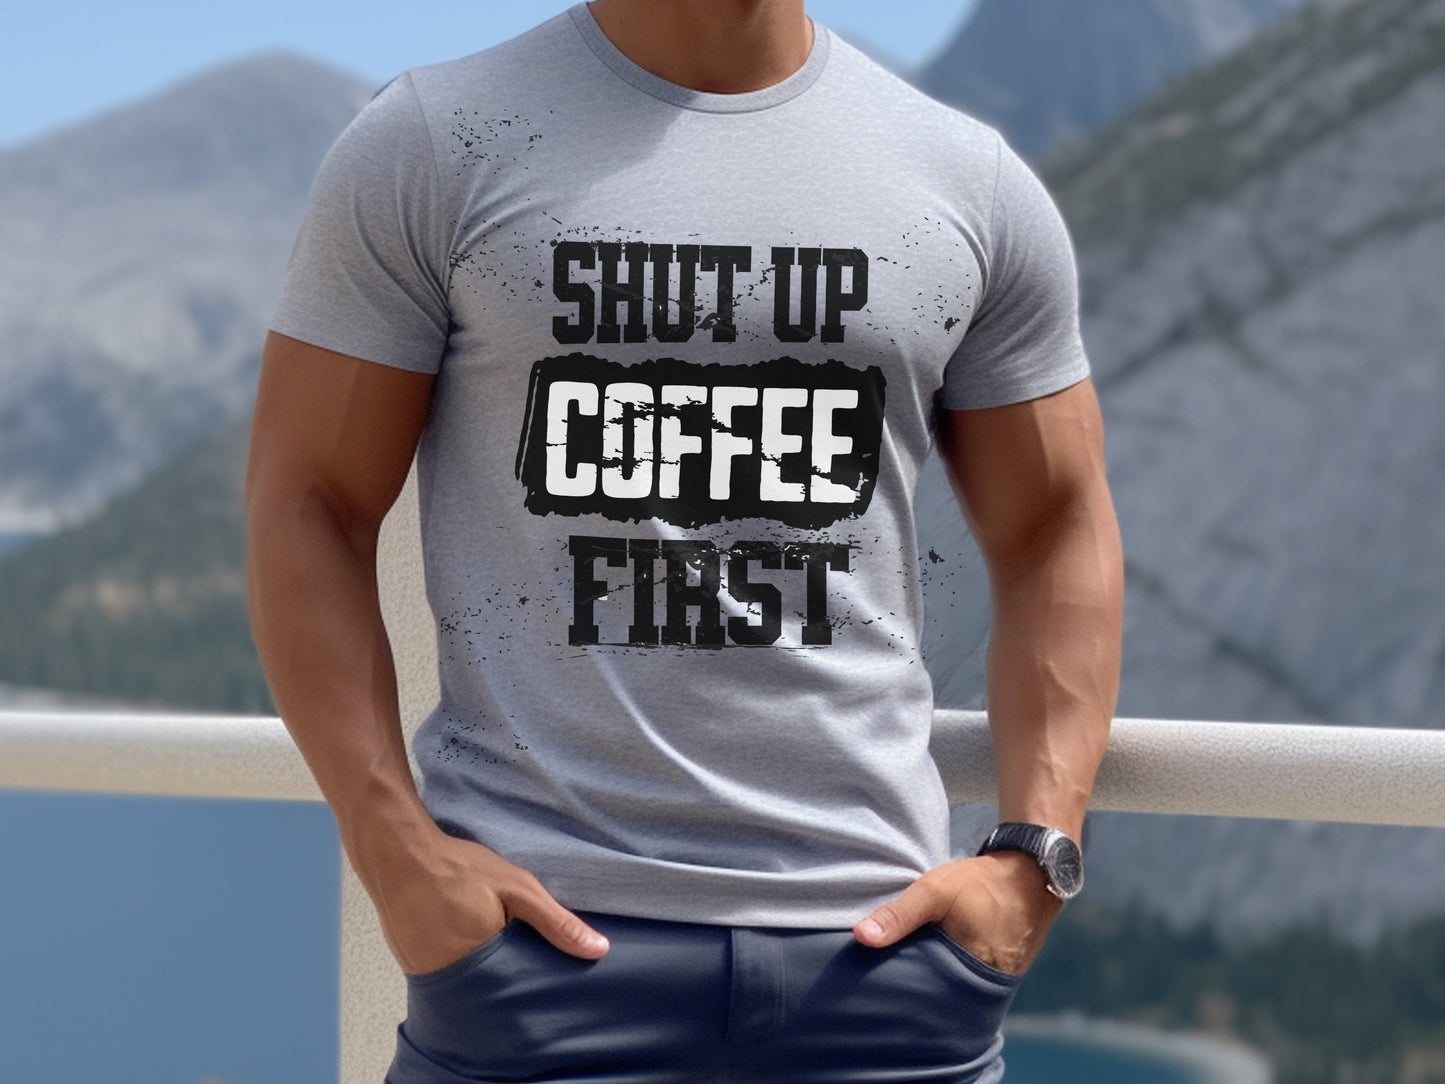 SHUT UP! COFFEE FIRST!